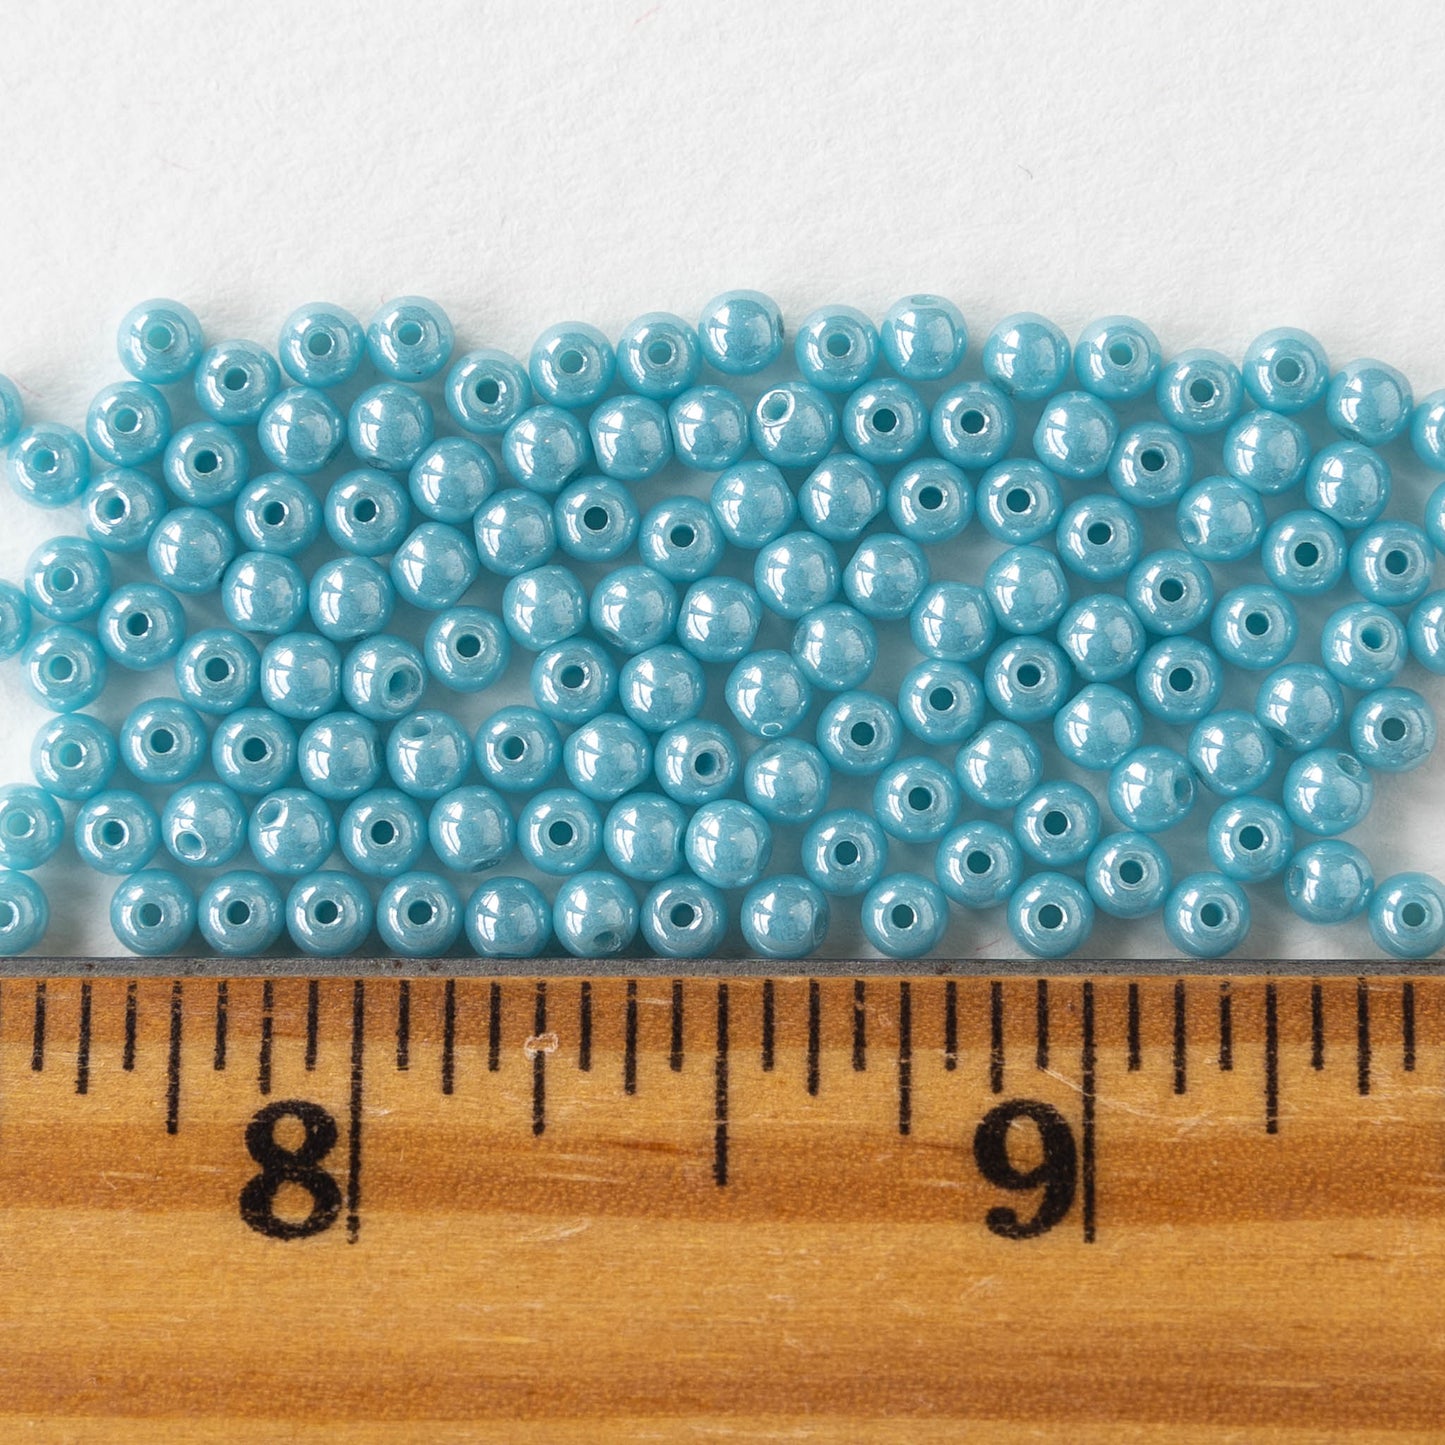 3mm Round Glass Beads - Light Blue Luster - 120 Beads